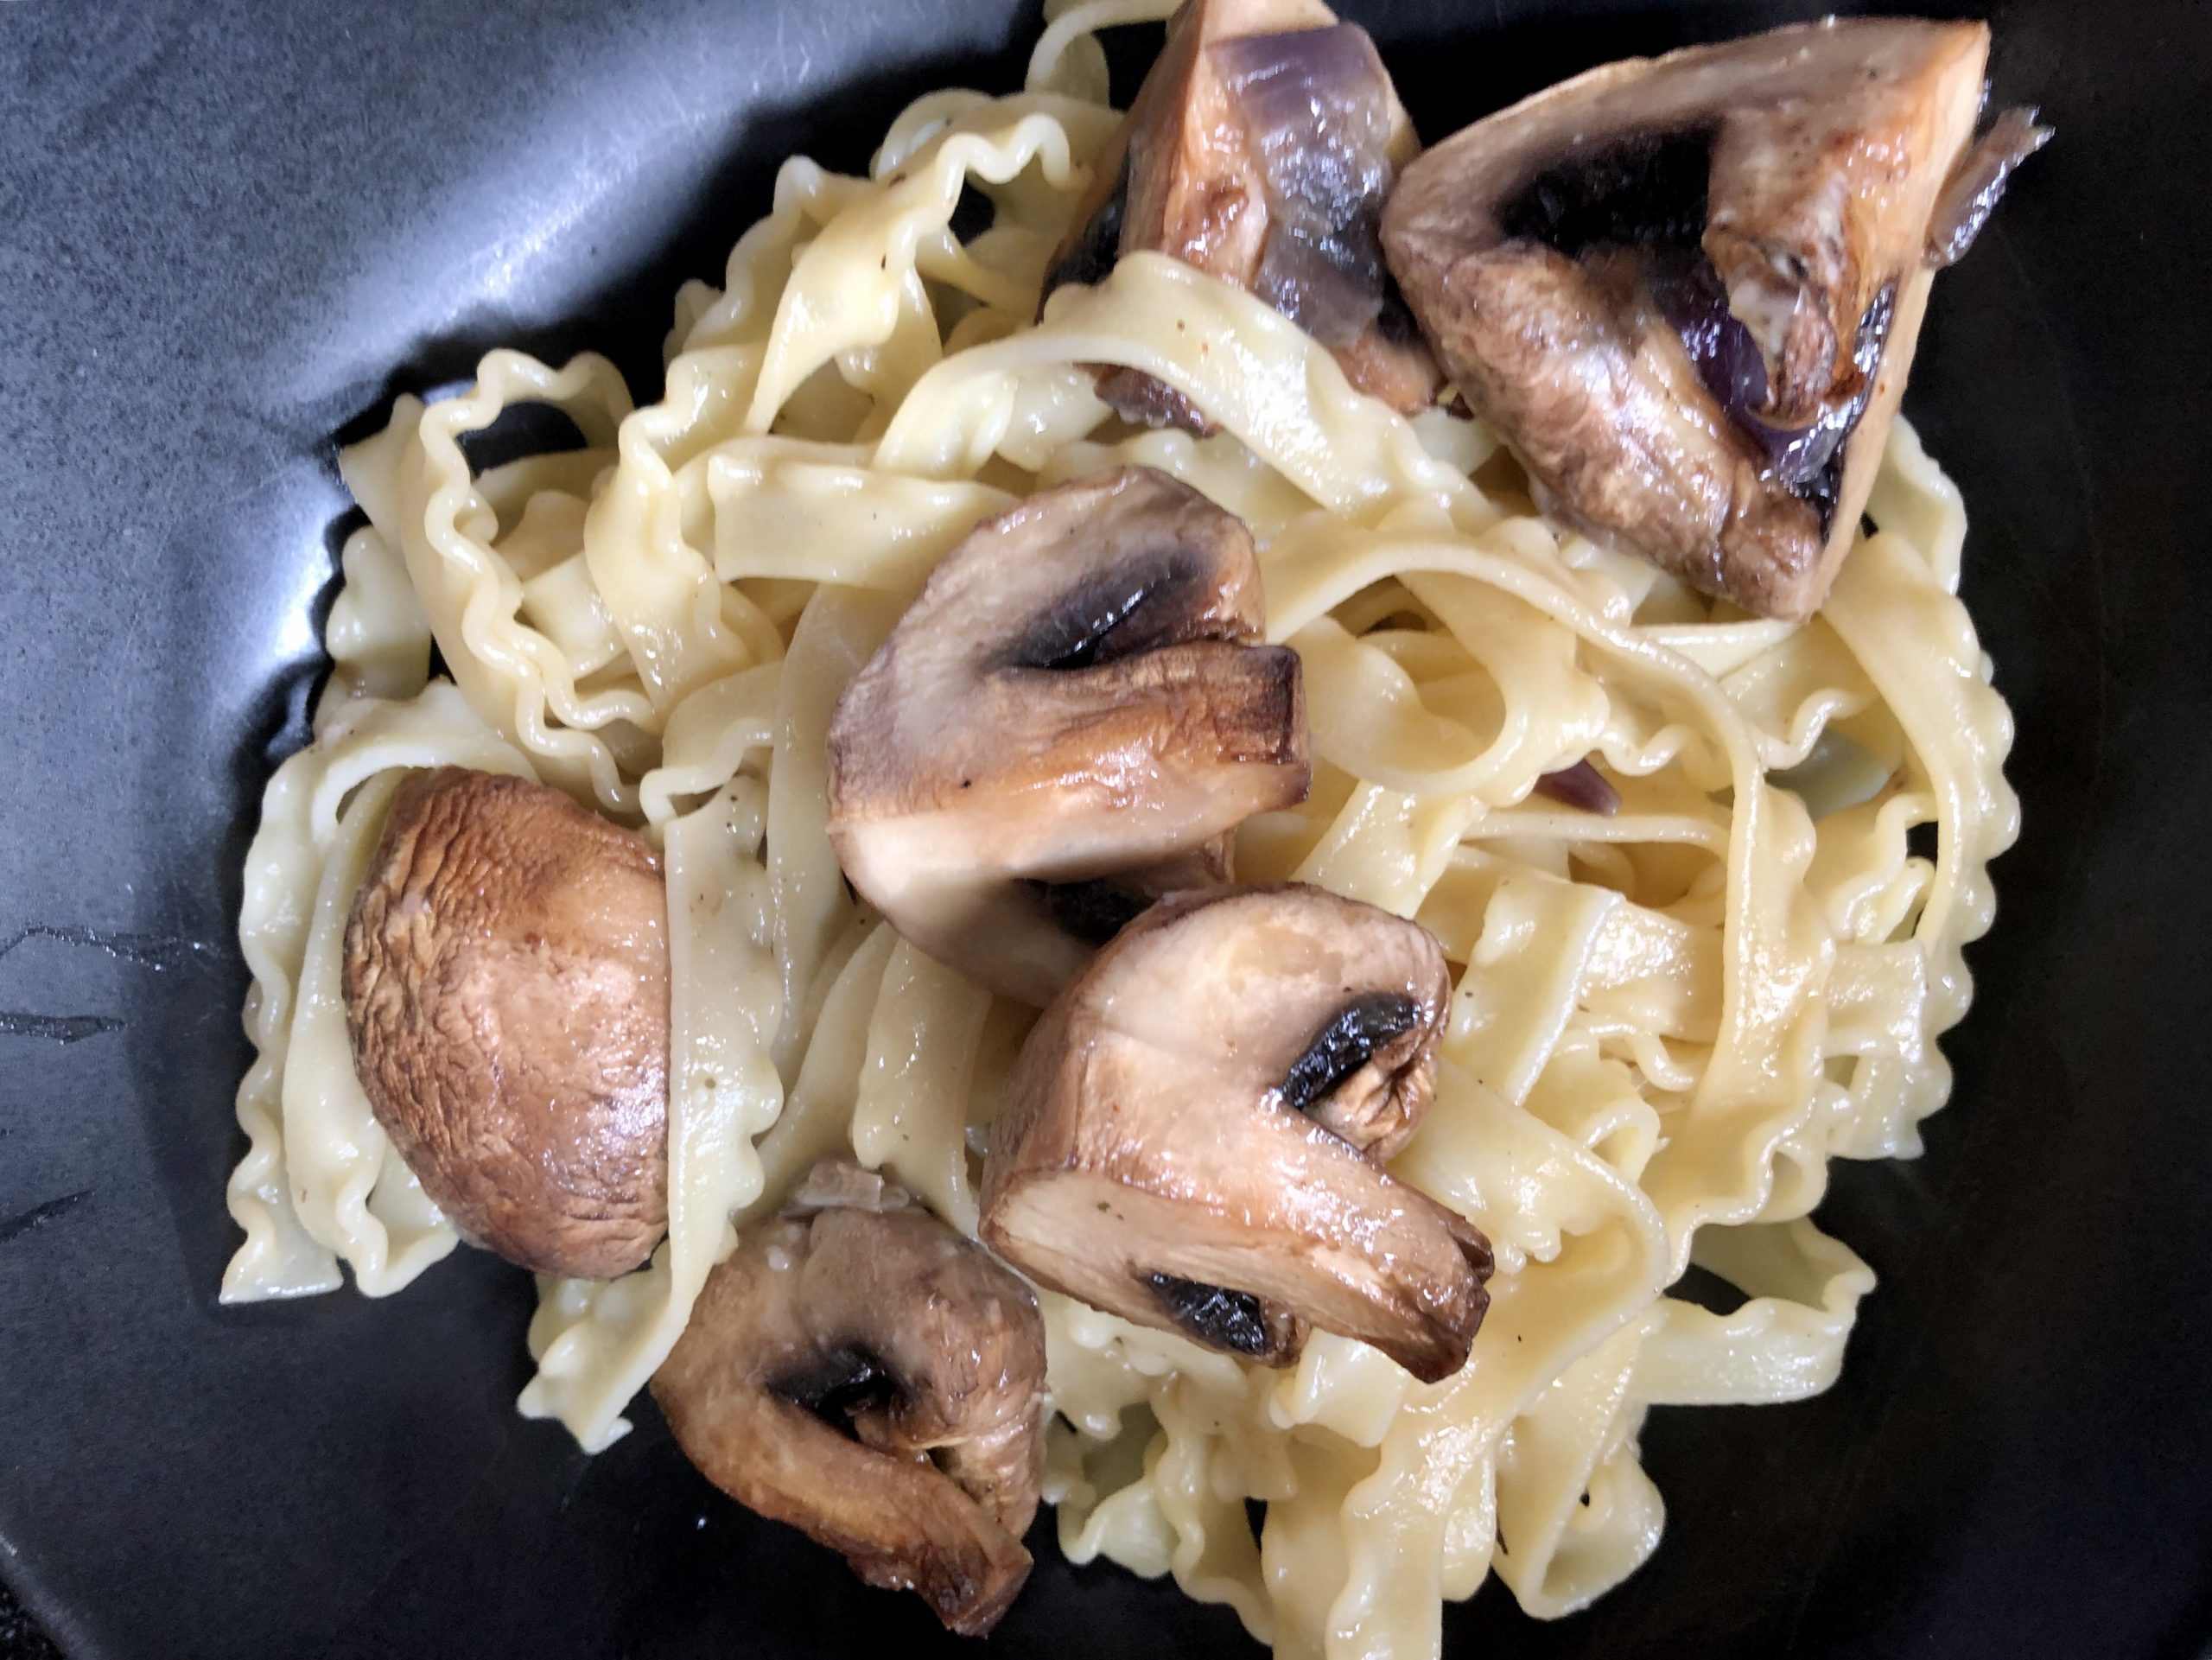 Tripoline ai funghi (pasta tripoline with mushrooms)